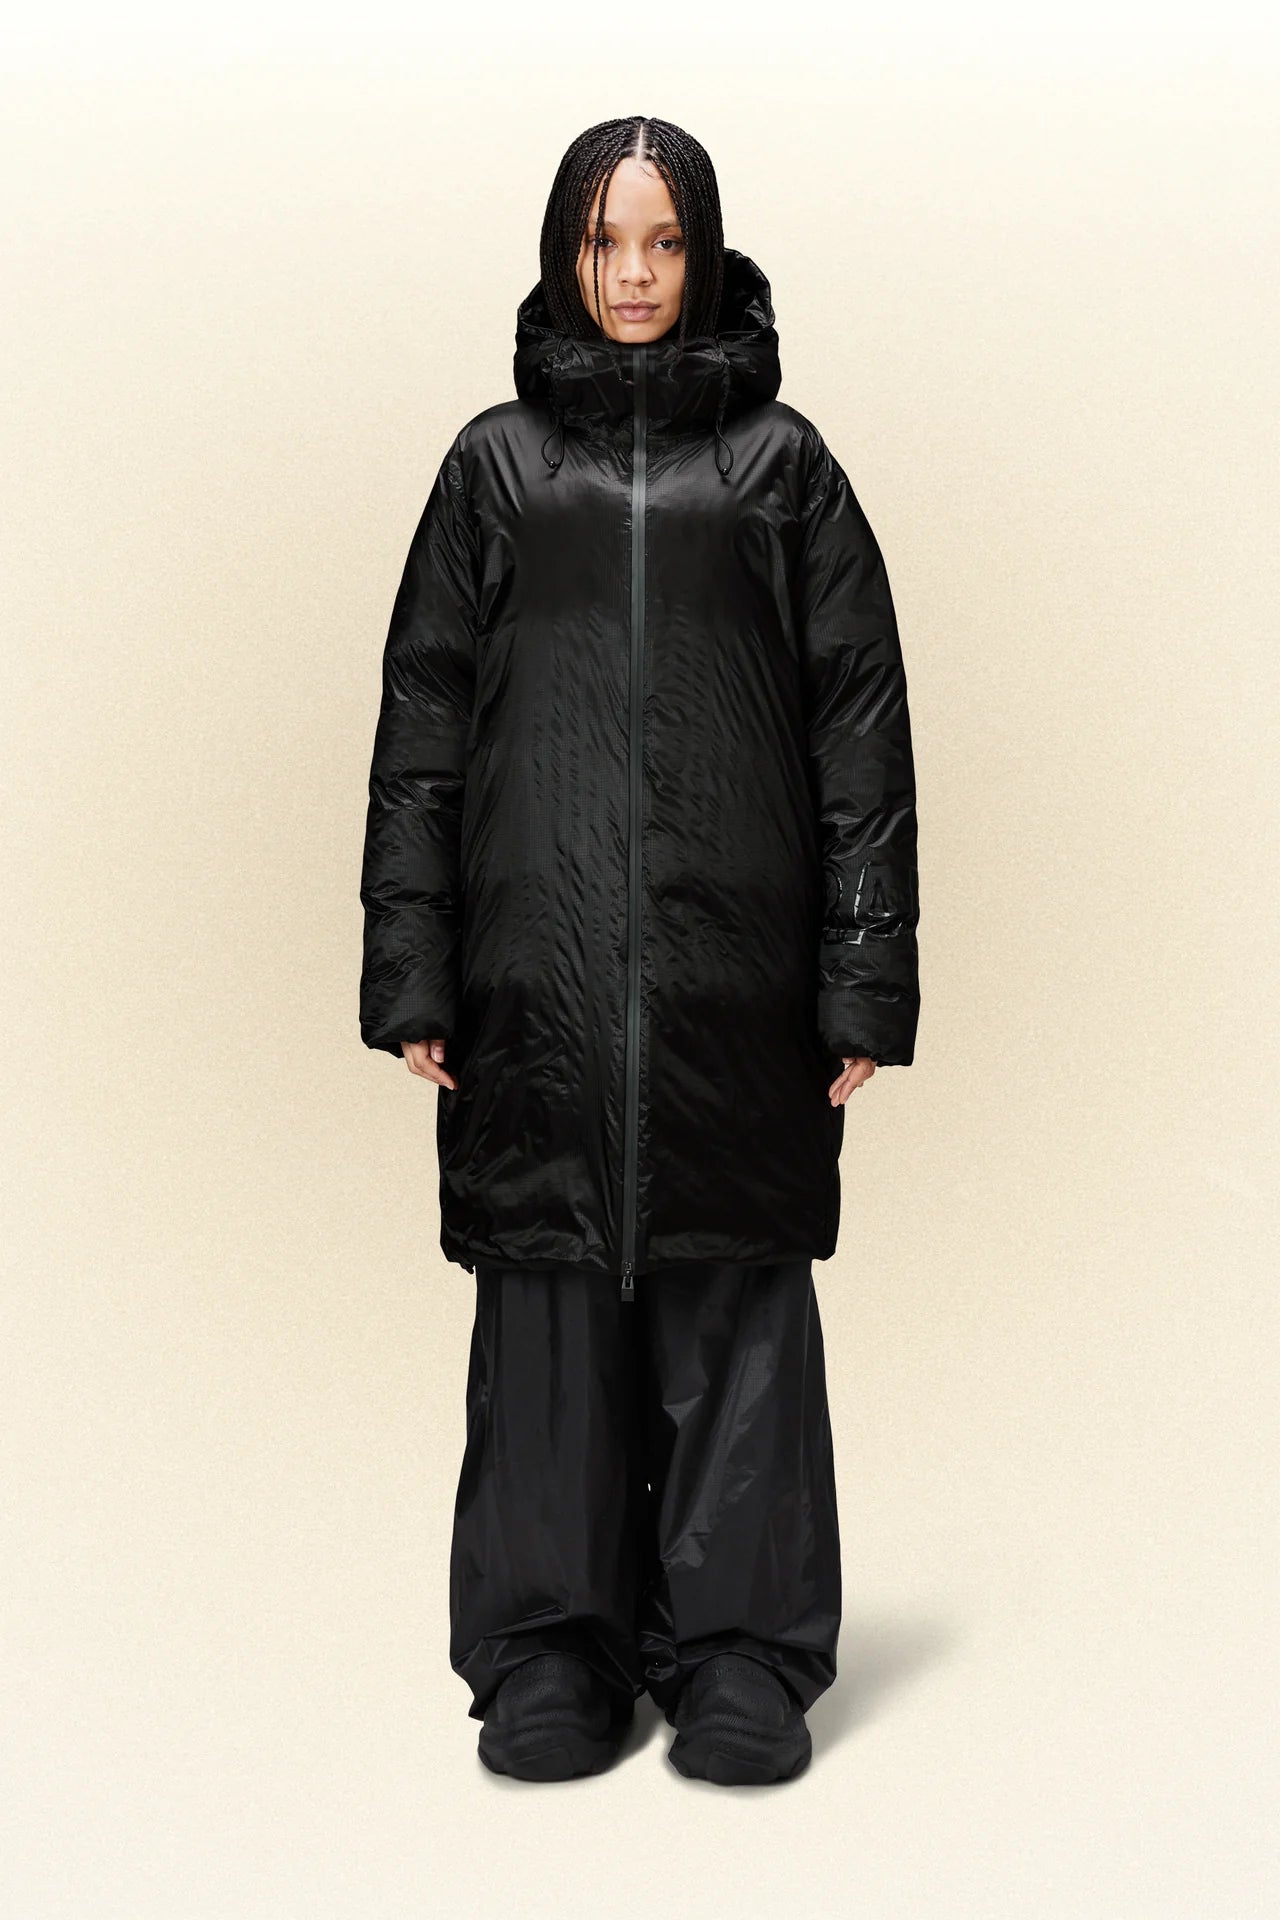 A woman wearing a Rains Kevo Long Puffer - Black coat.